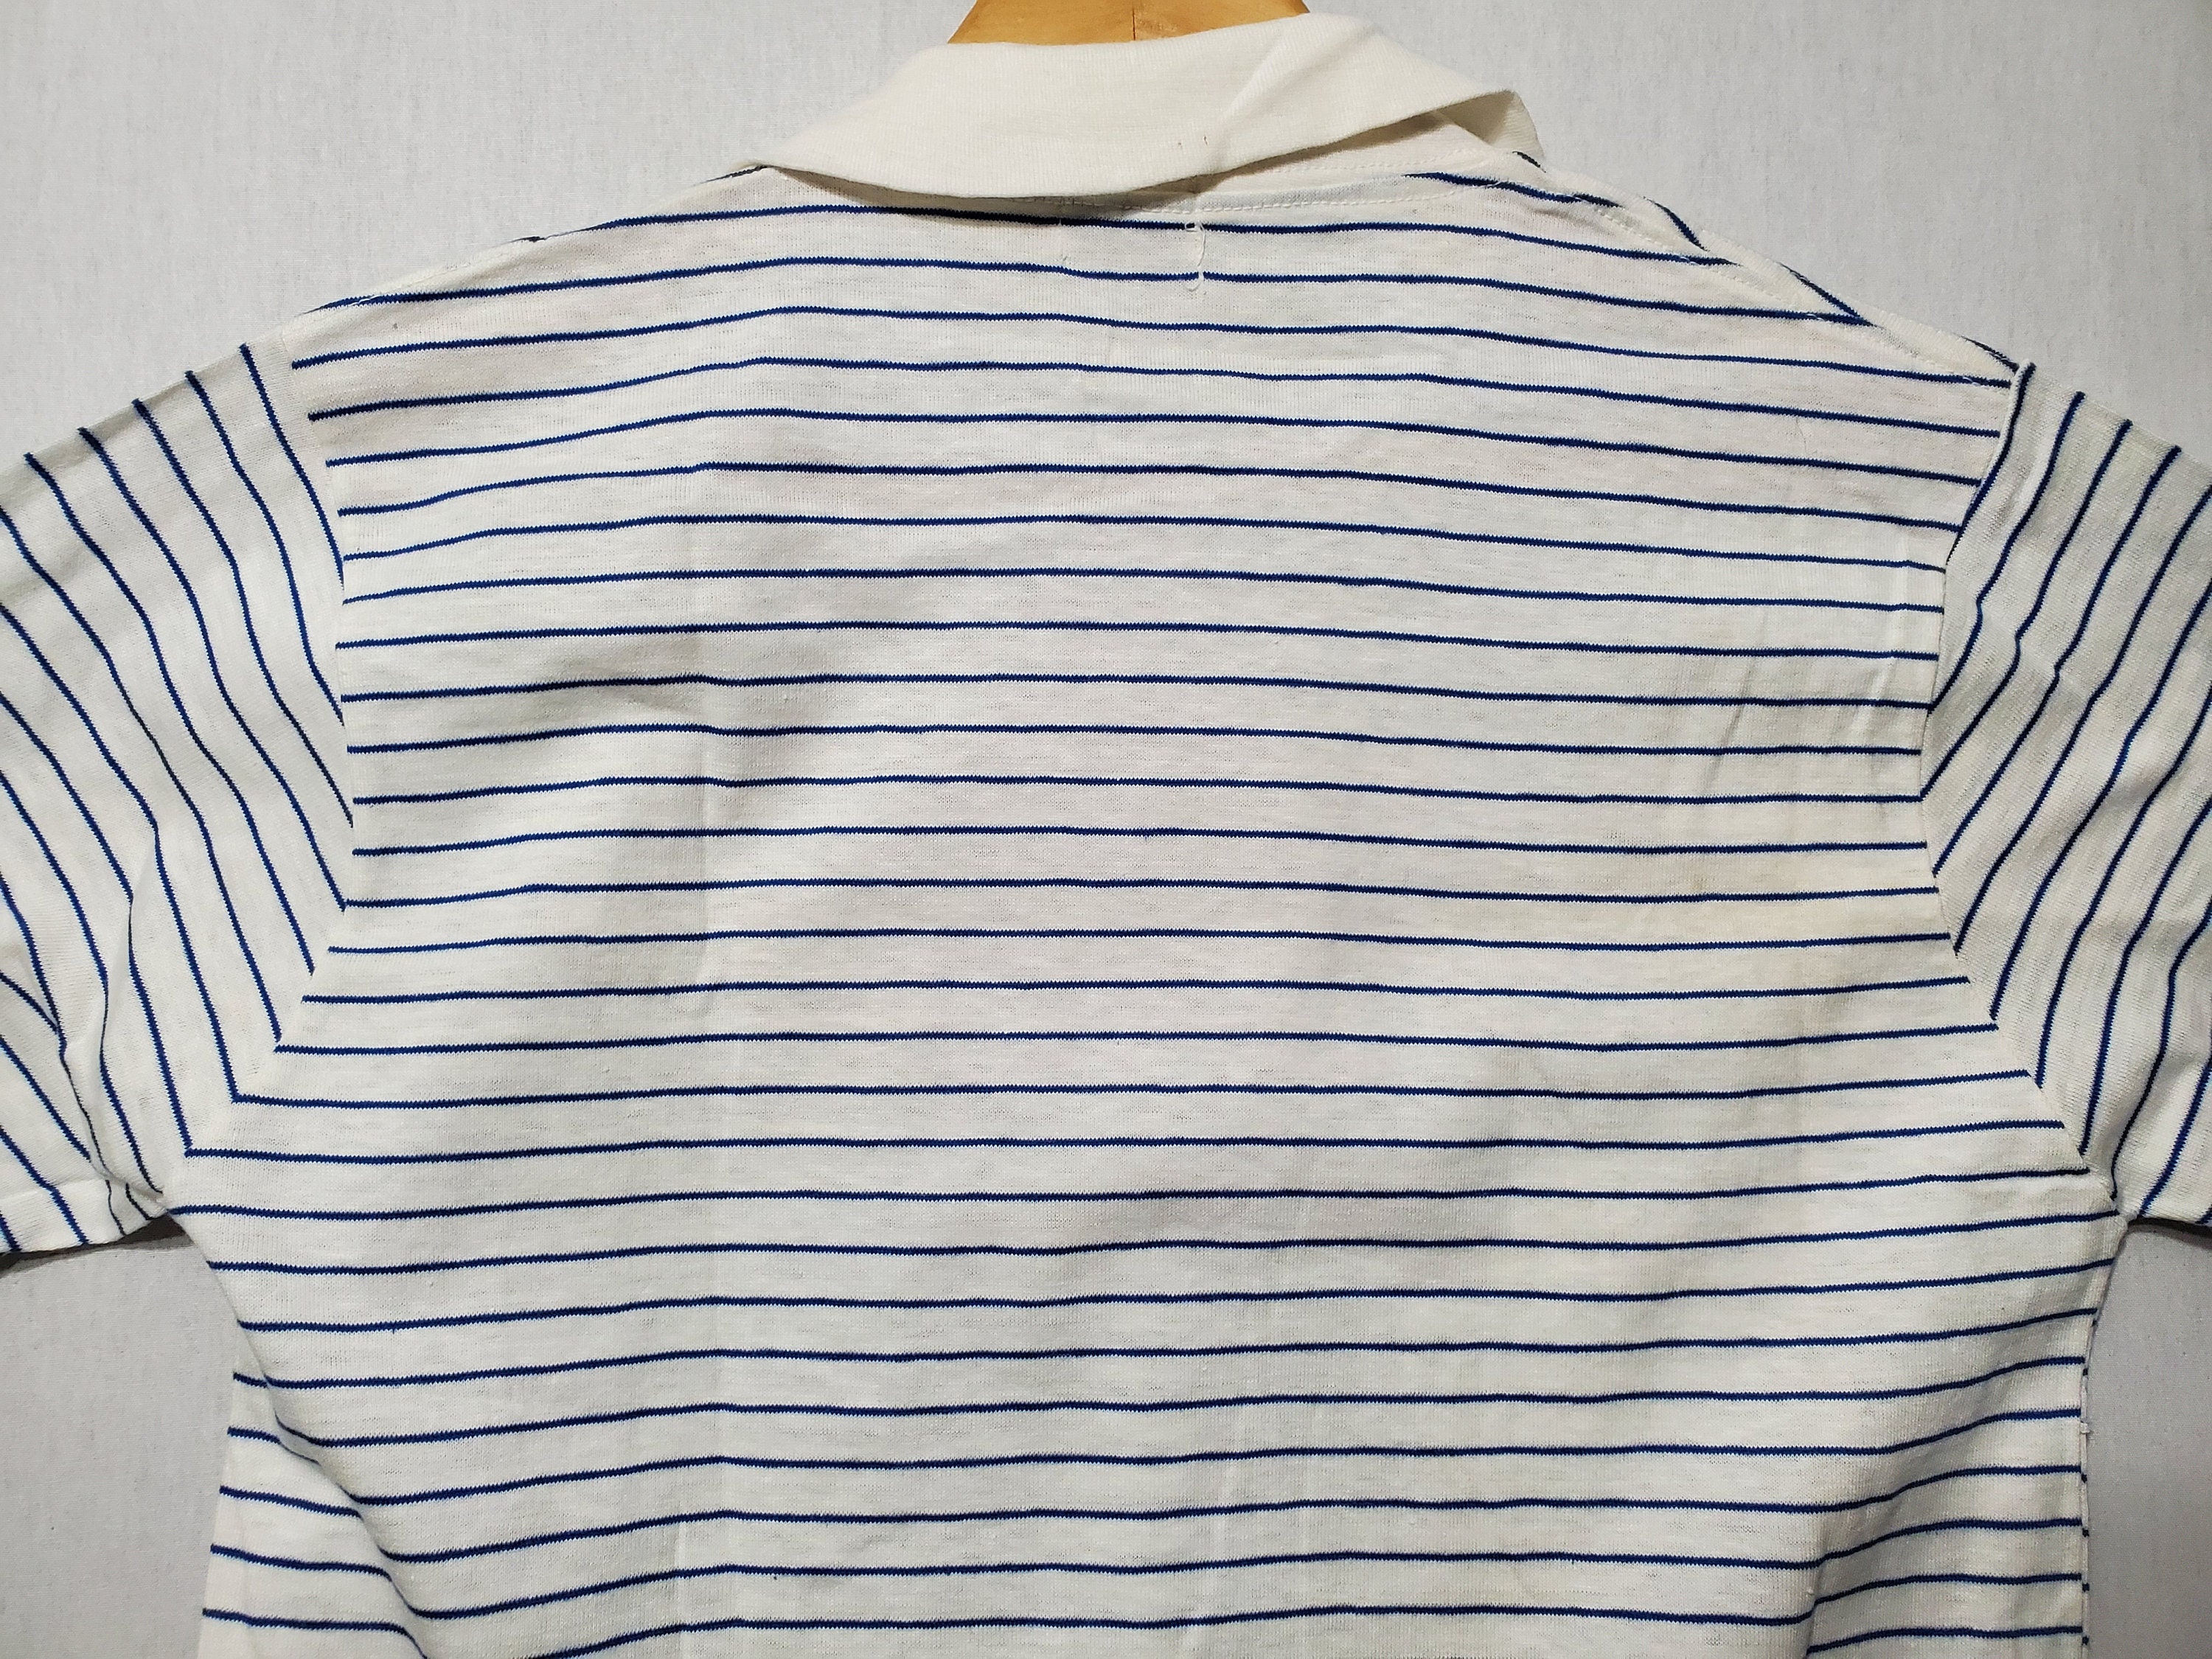 NOS Vintage 1950's Border Stripe Collared T Shirt M | Etsy